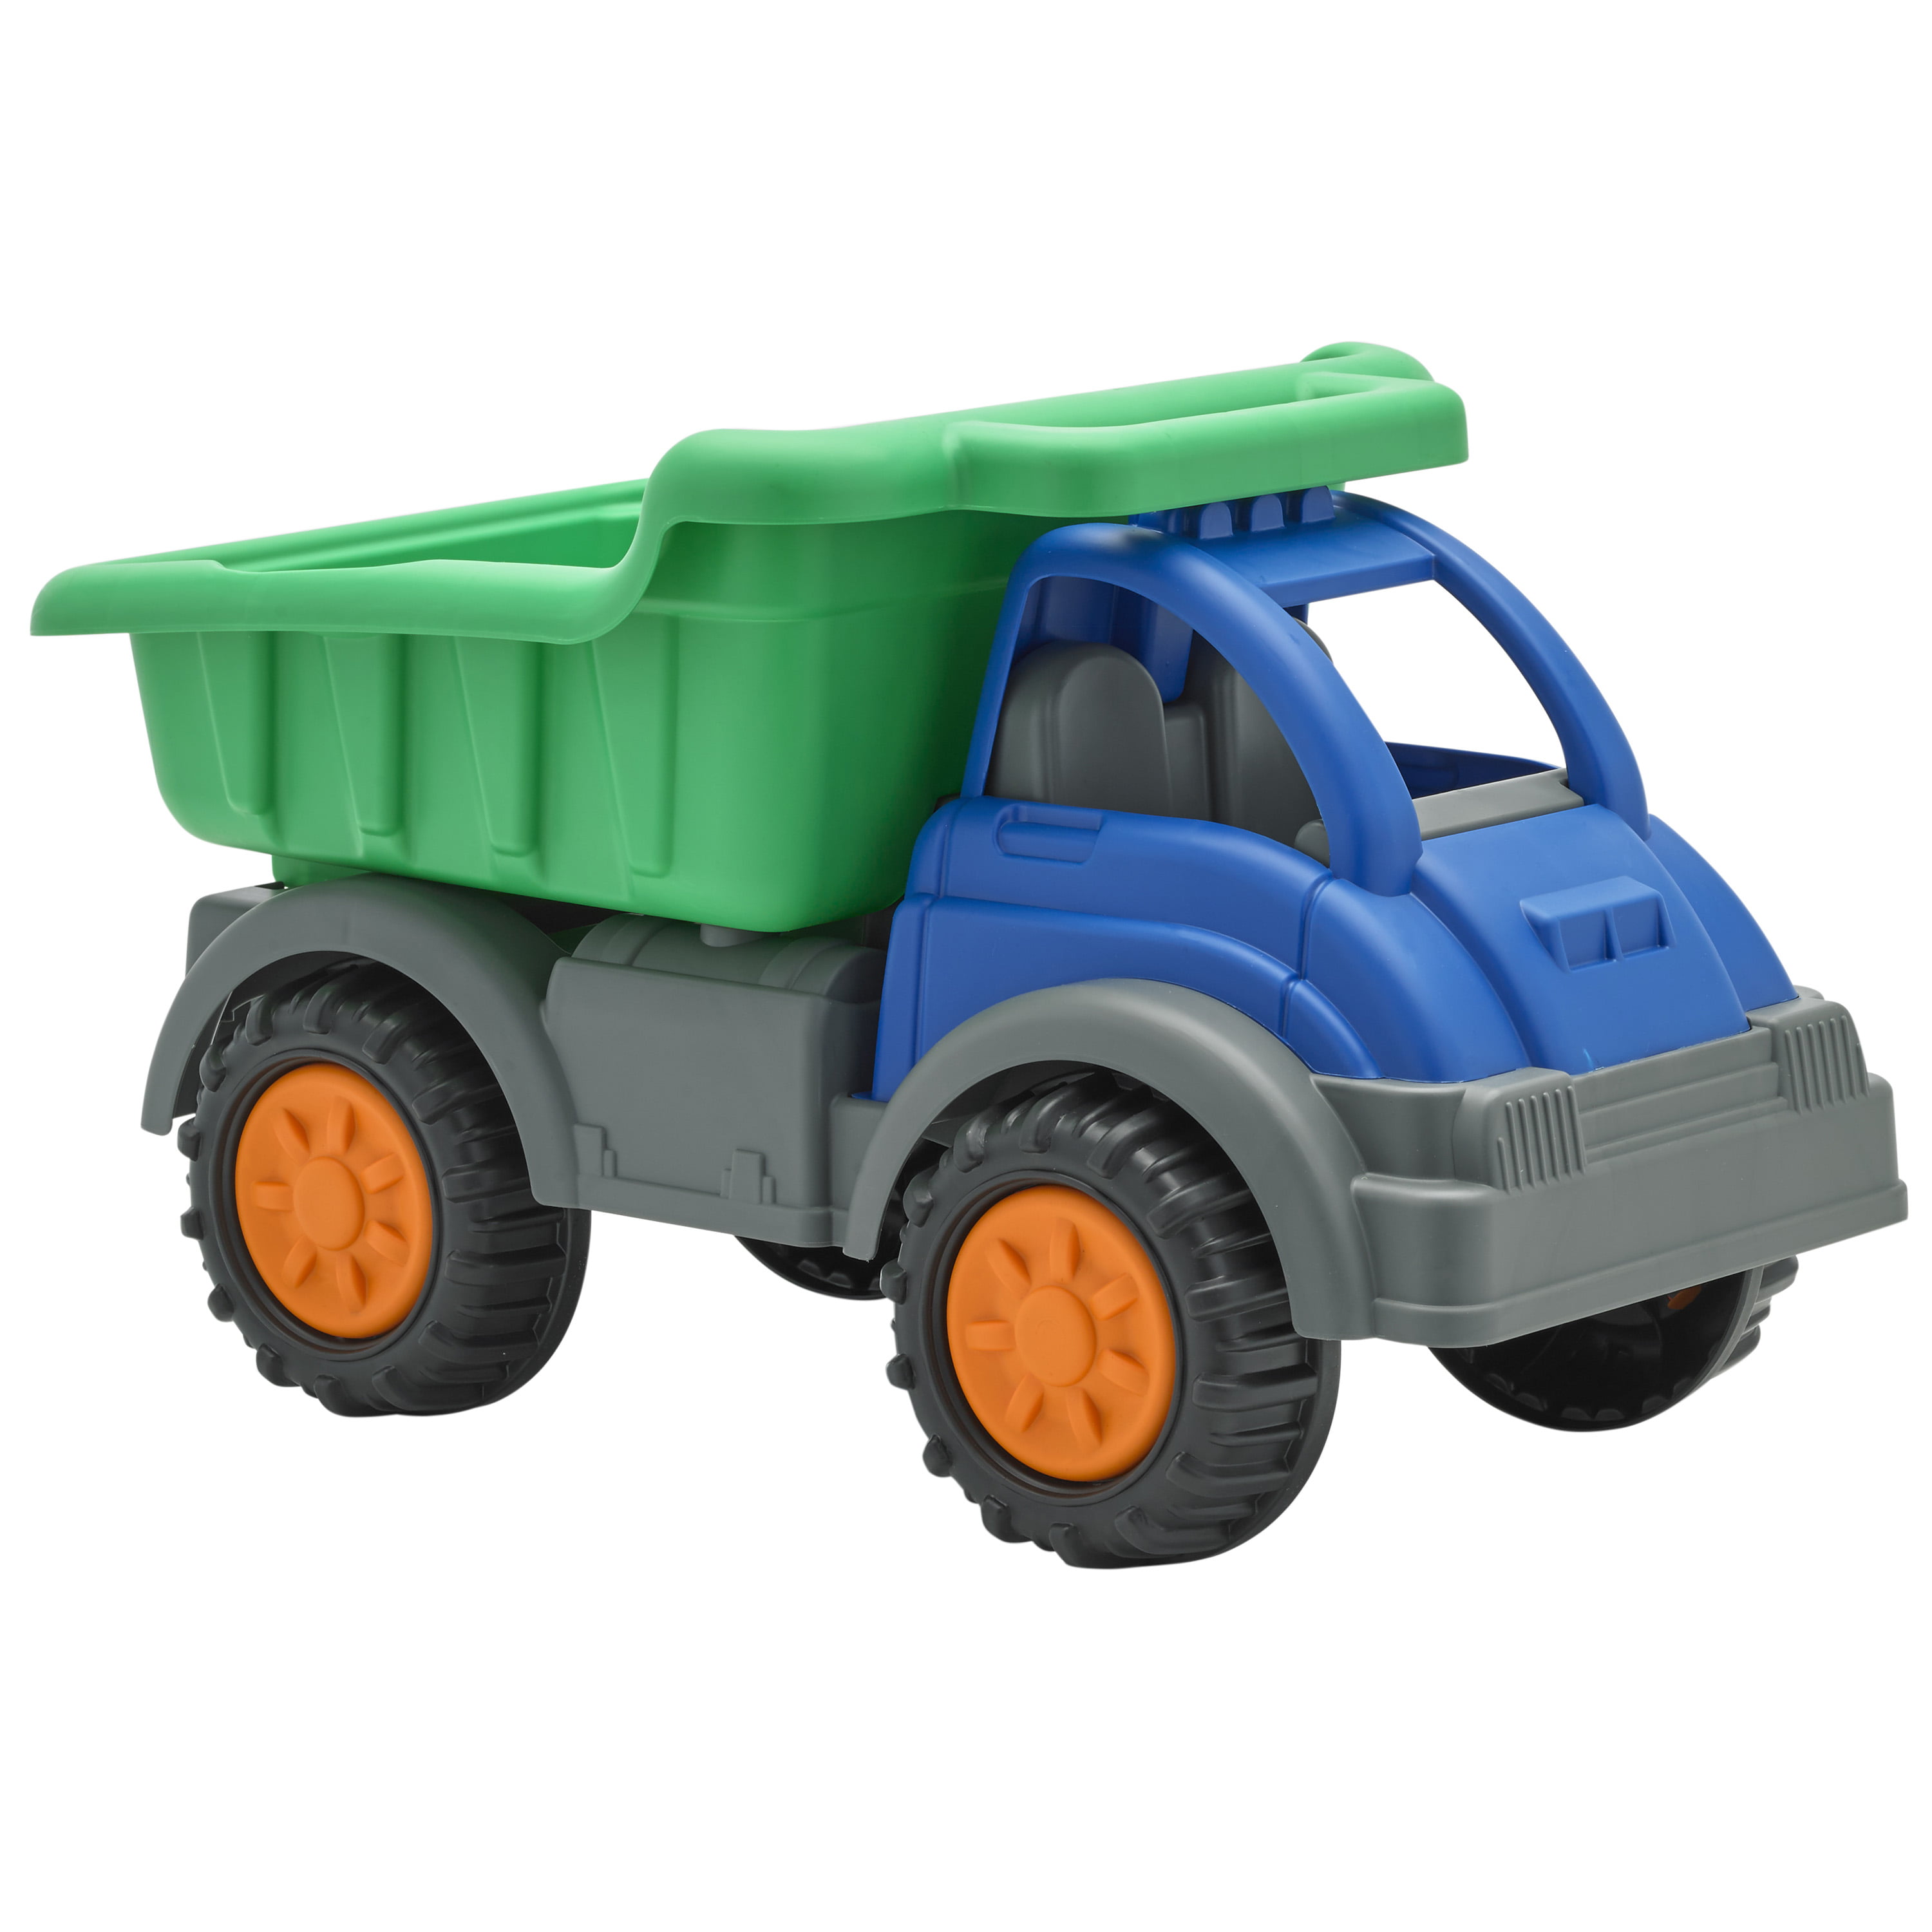 large toy dump truck plastic